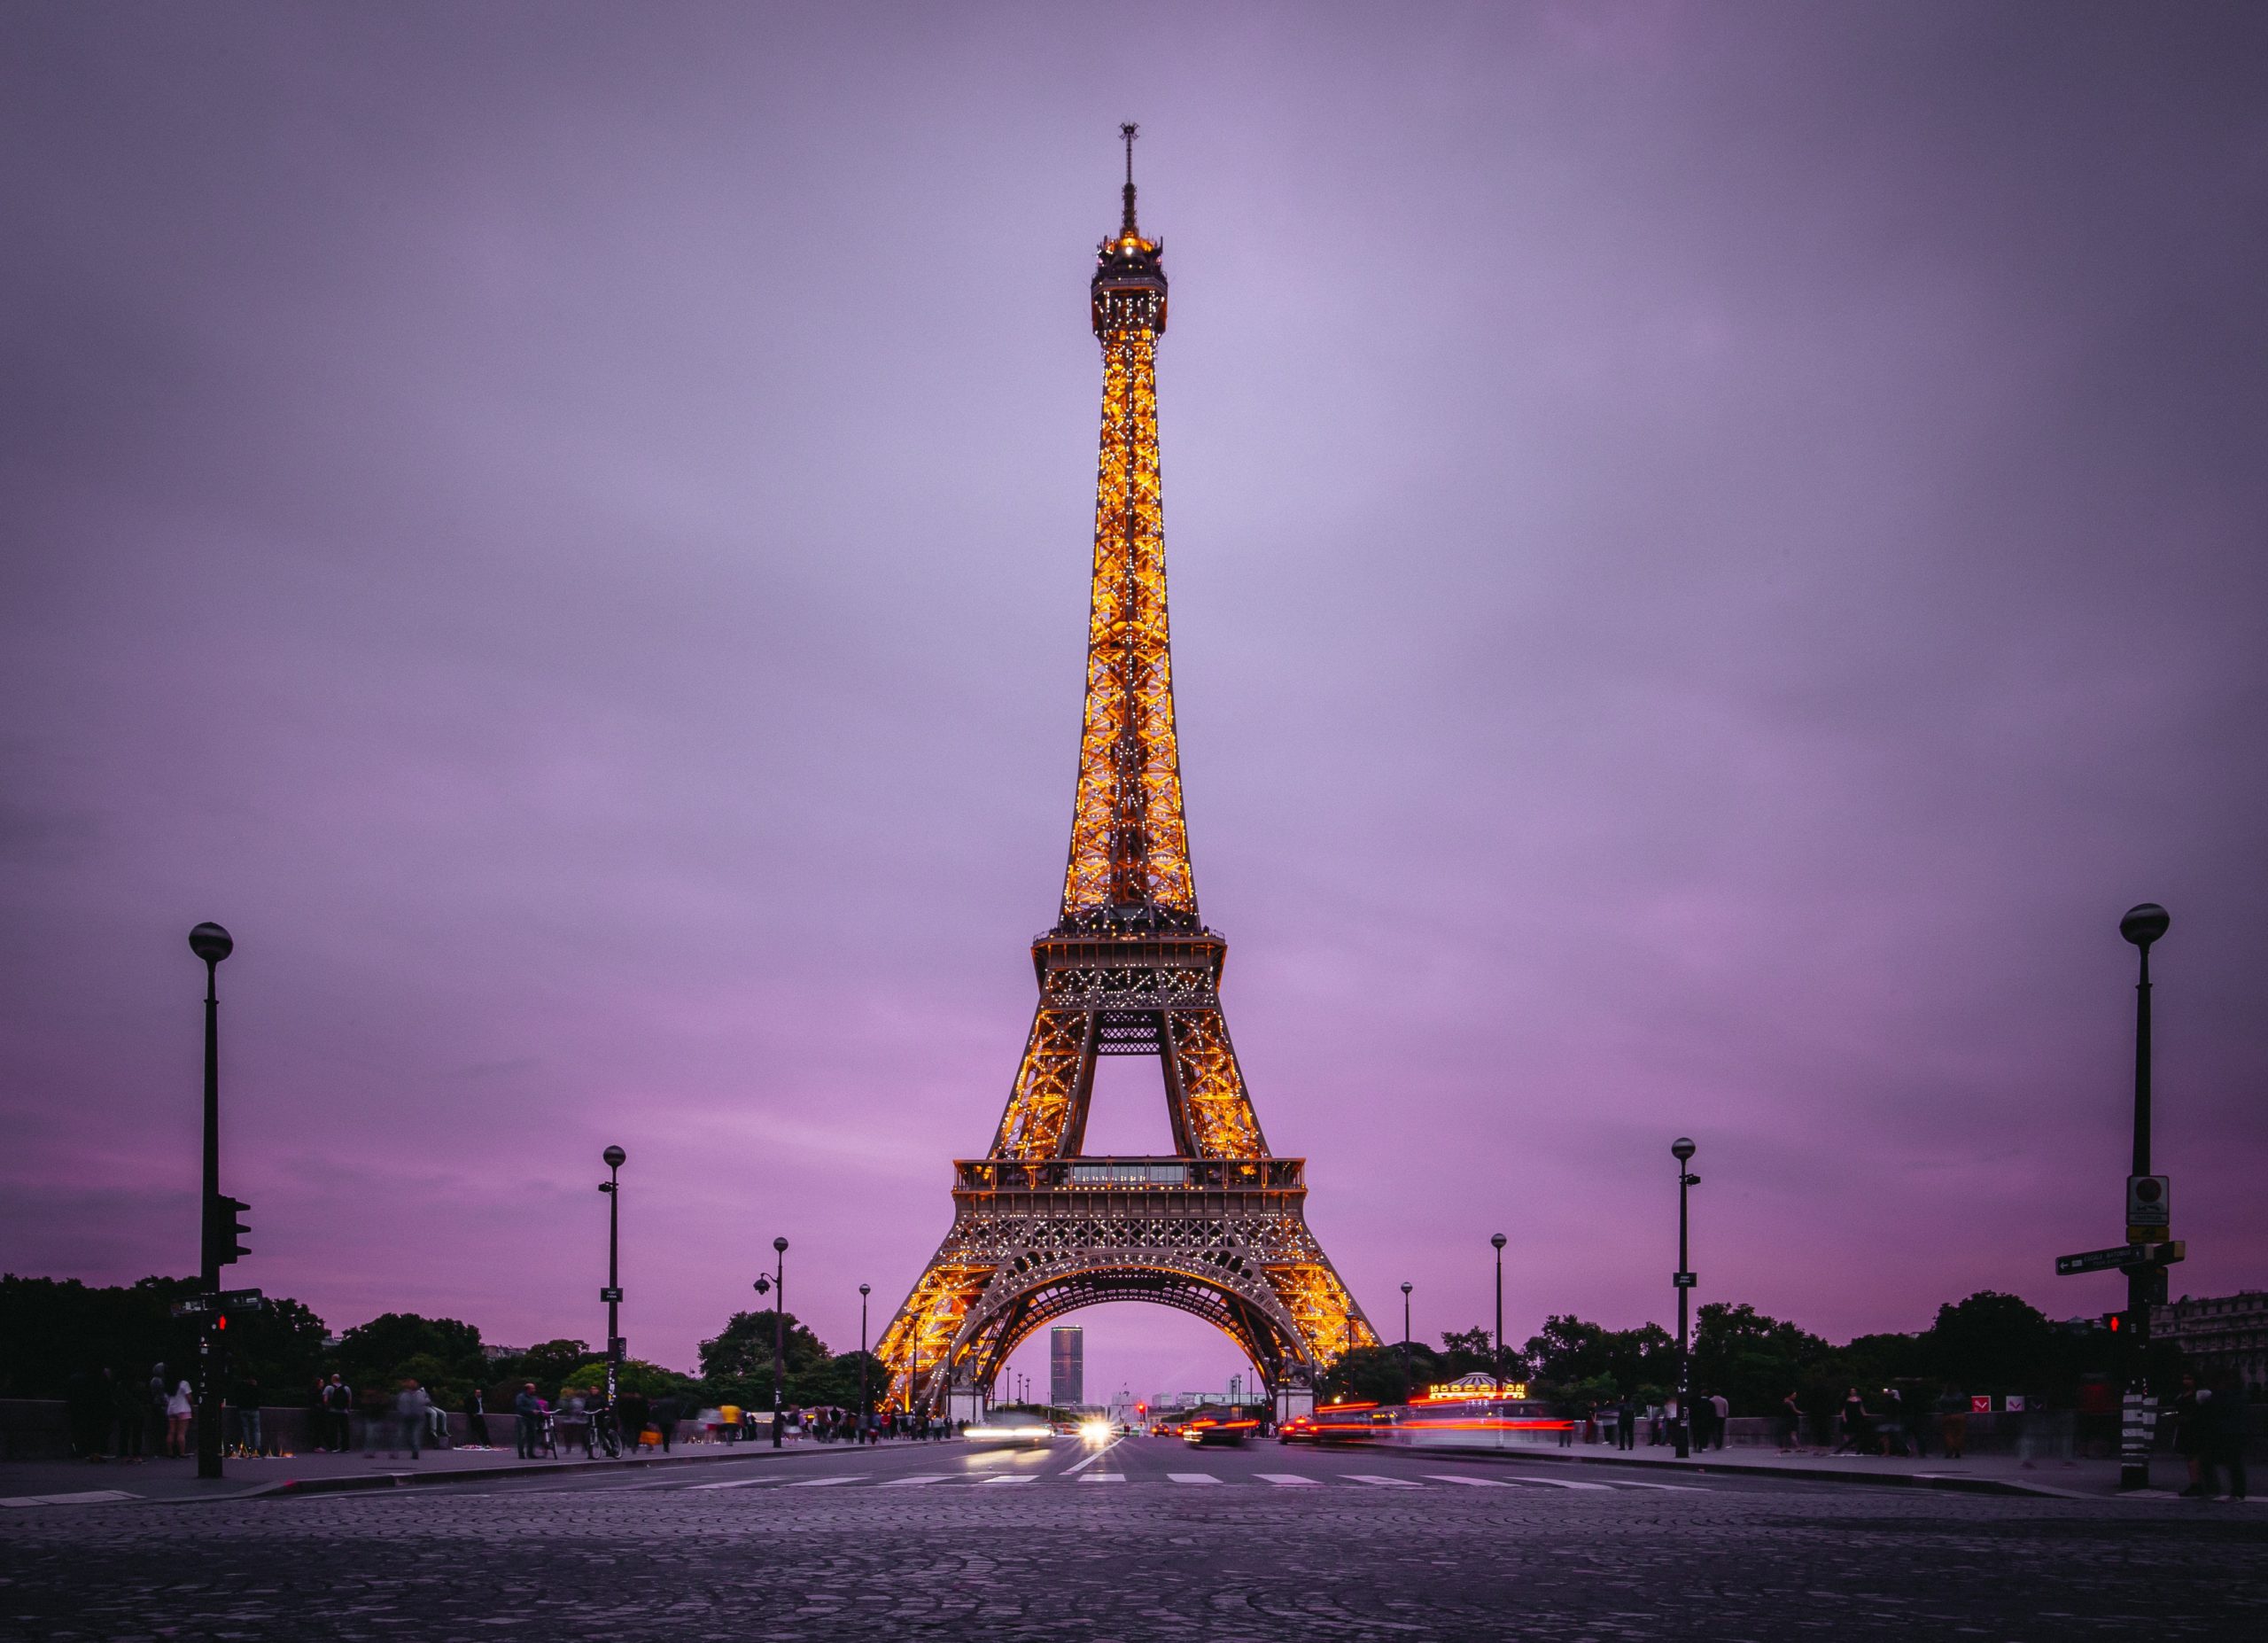 Eiffel tower civil engineering